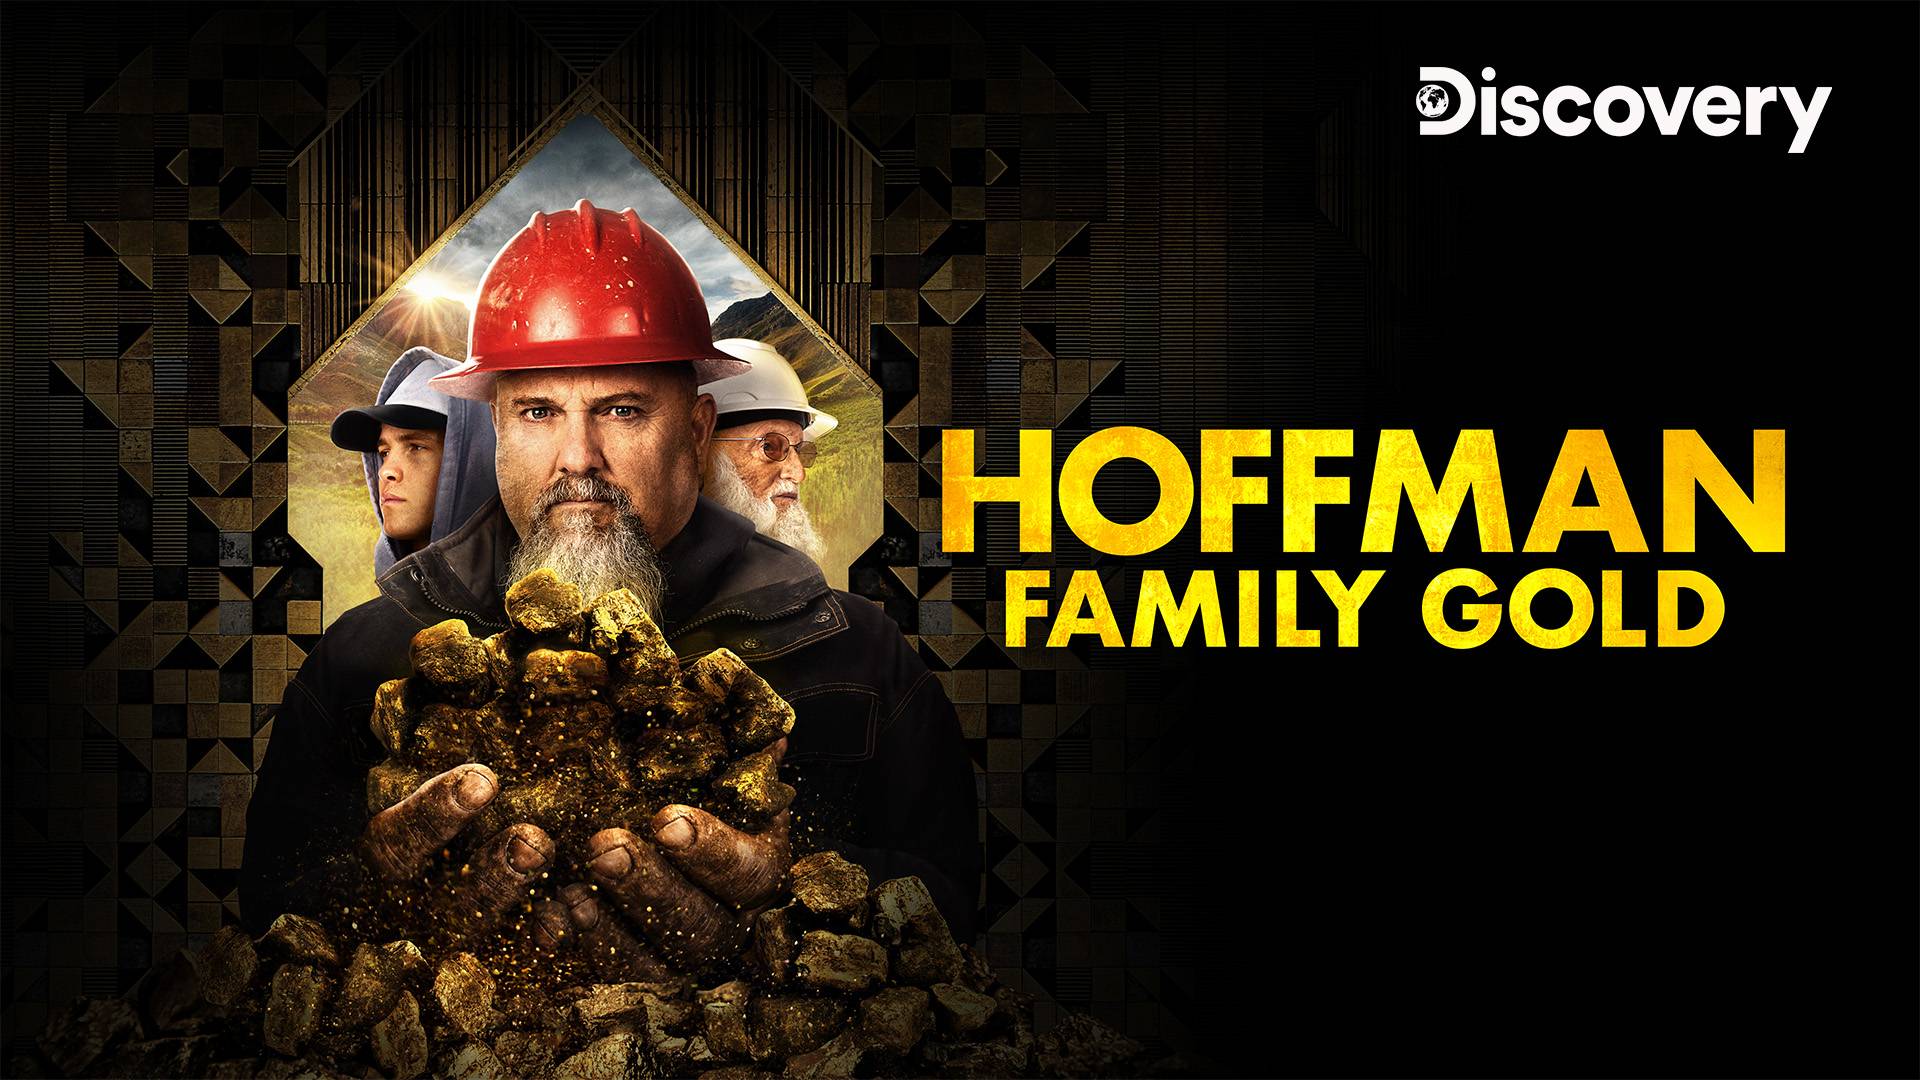 Hoffman Family Gold ดูซีรี่ส์ออนไลน์